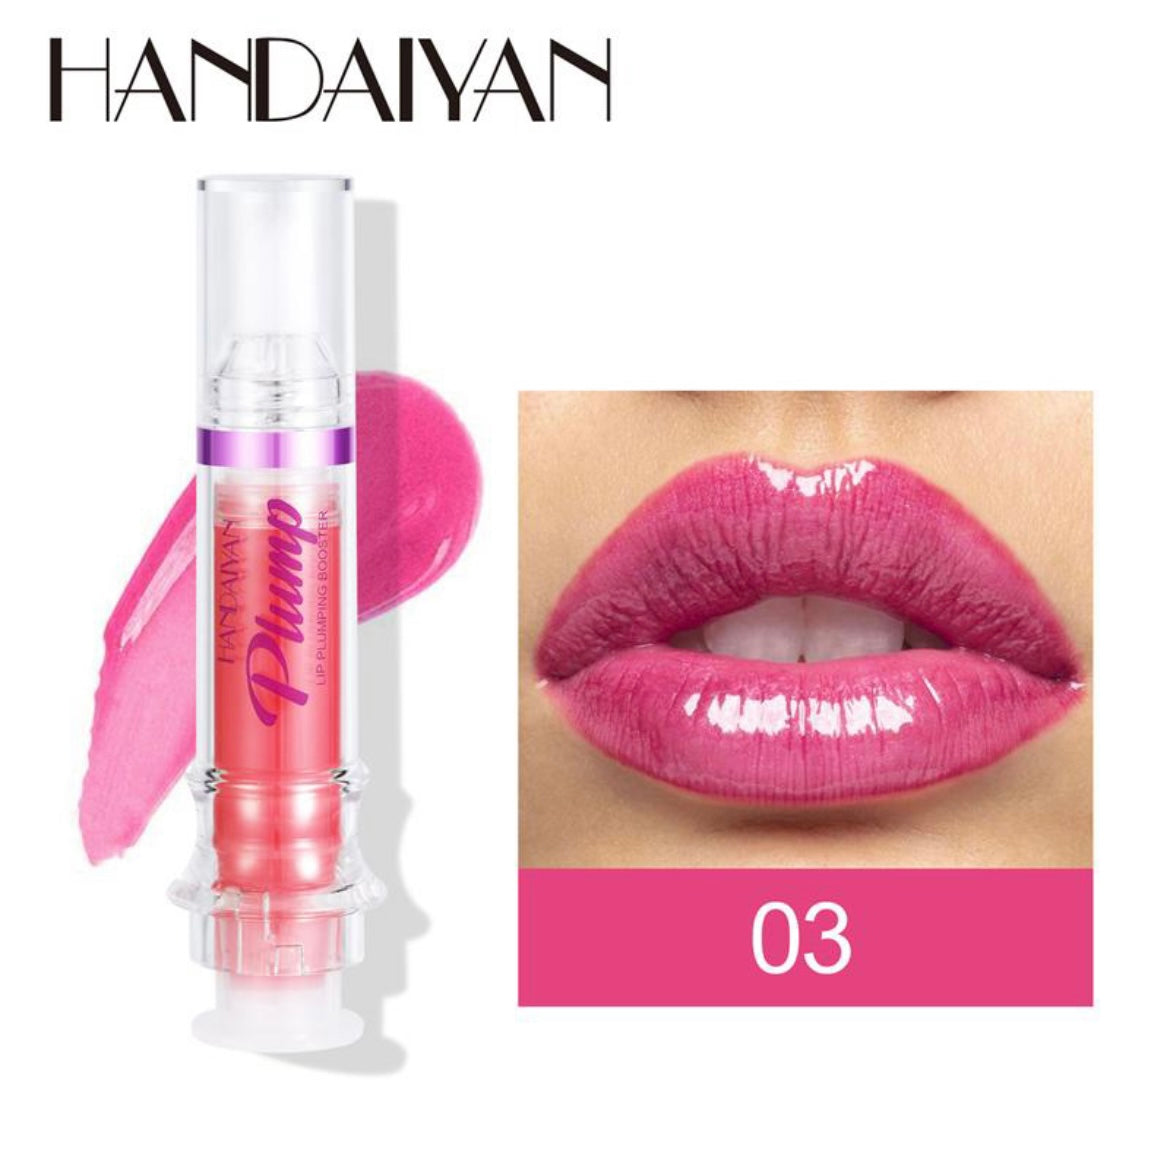 Handaiyan Lip Plumper